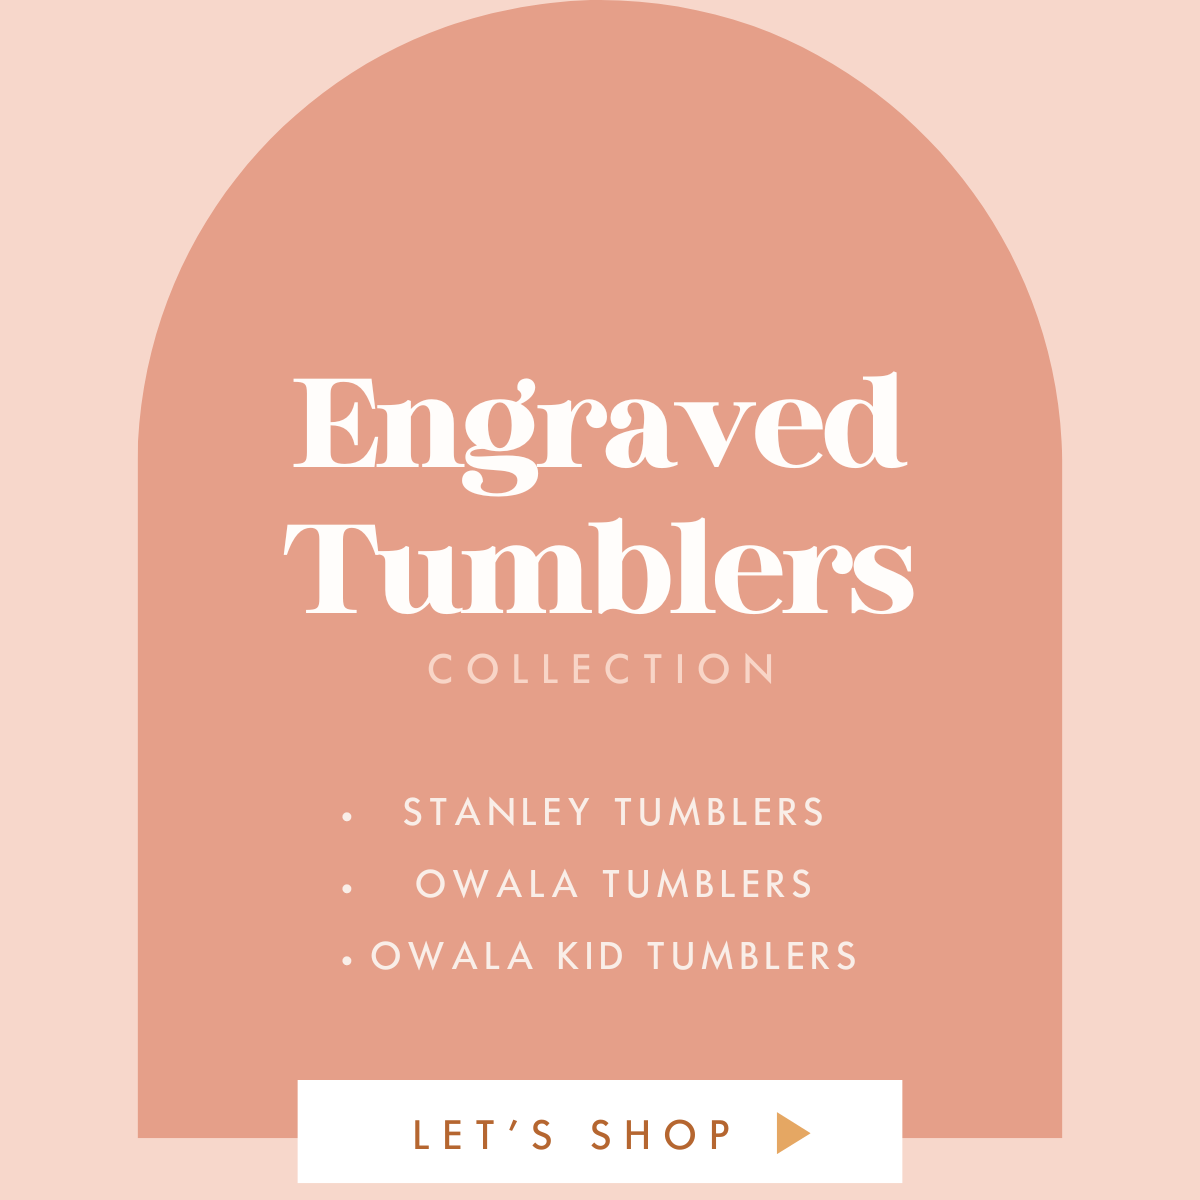 Engraved Tumblers